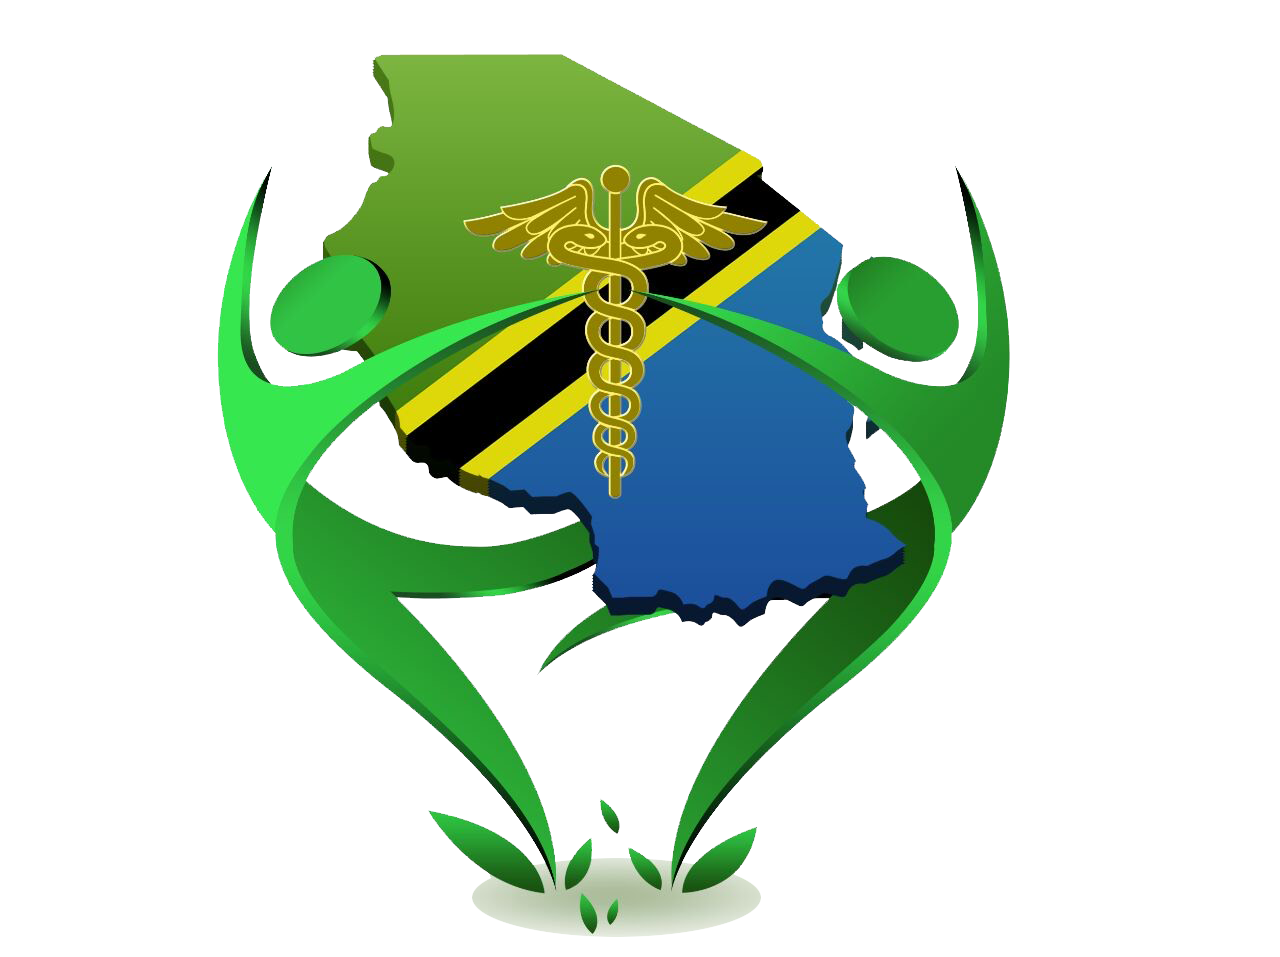 Tanzania Health and Medical Education Foundation